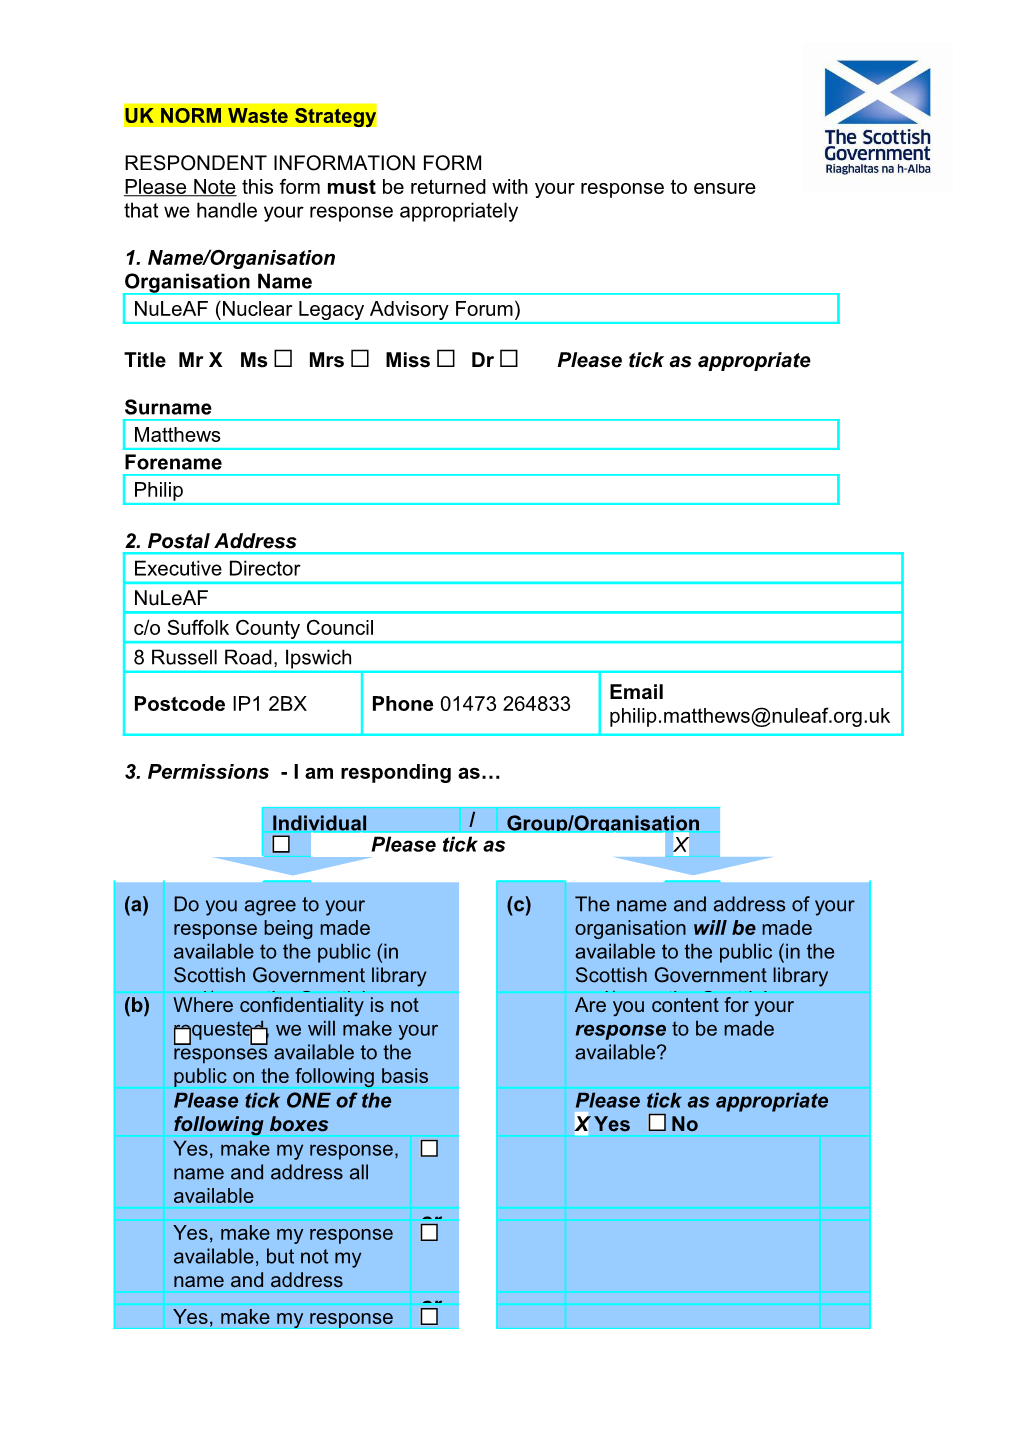 Respondent Information Form (RIF) s1